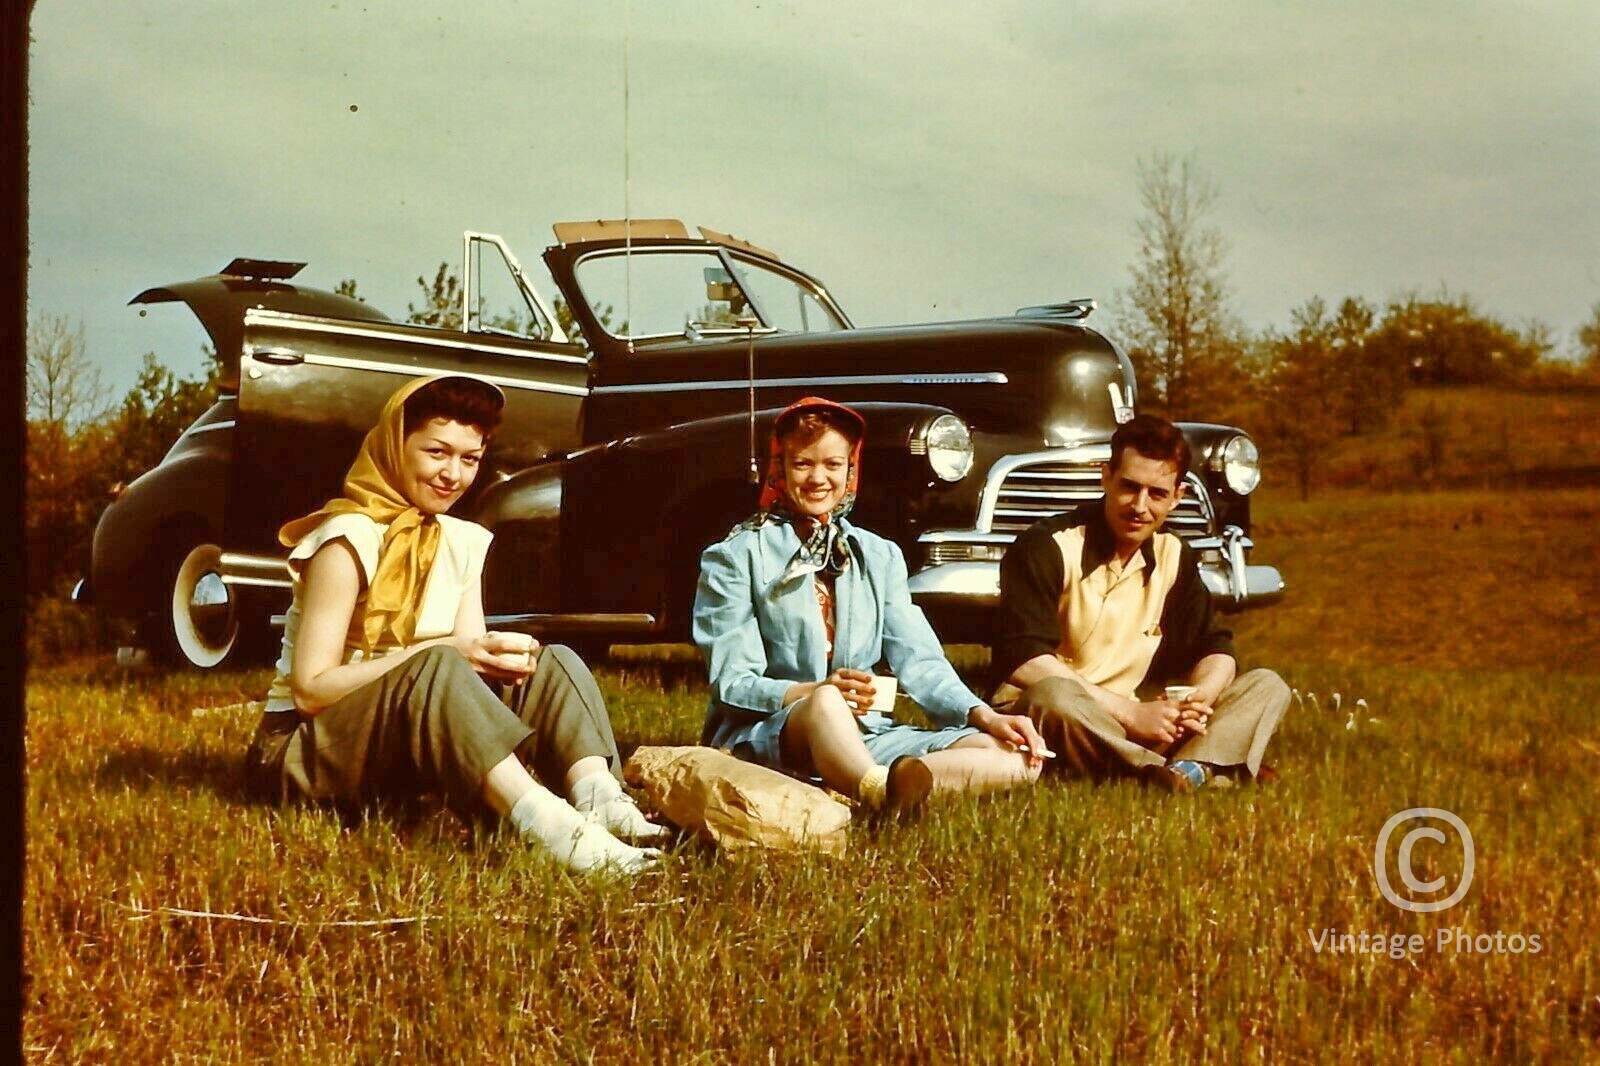 1950s American Fashion - Classic Convertible Car - Family picnic